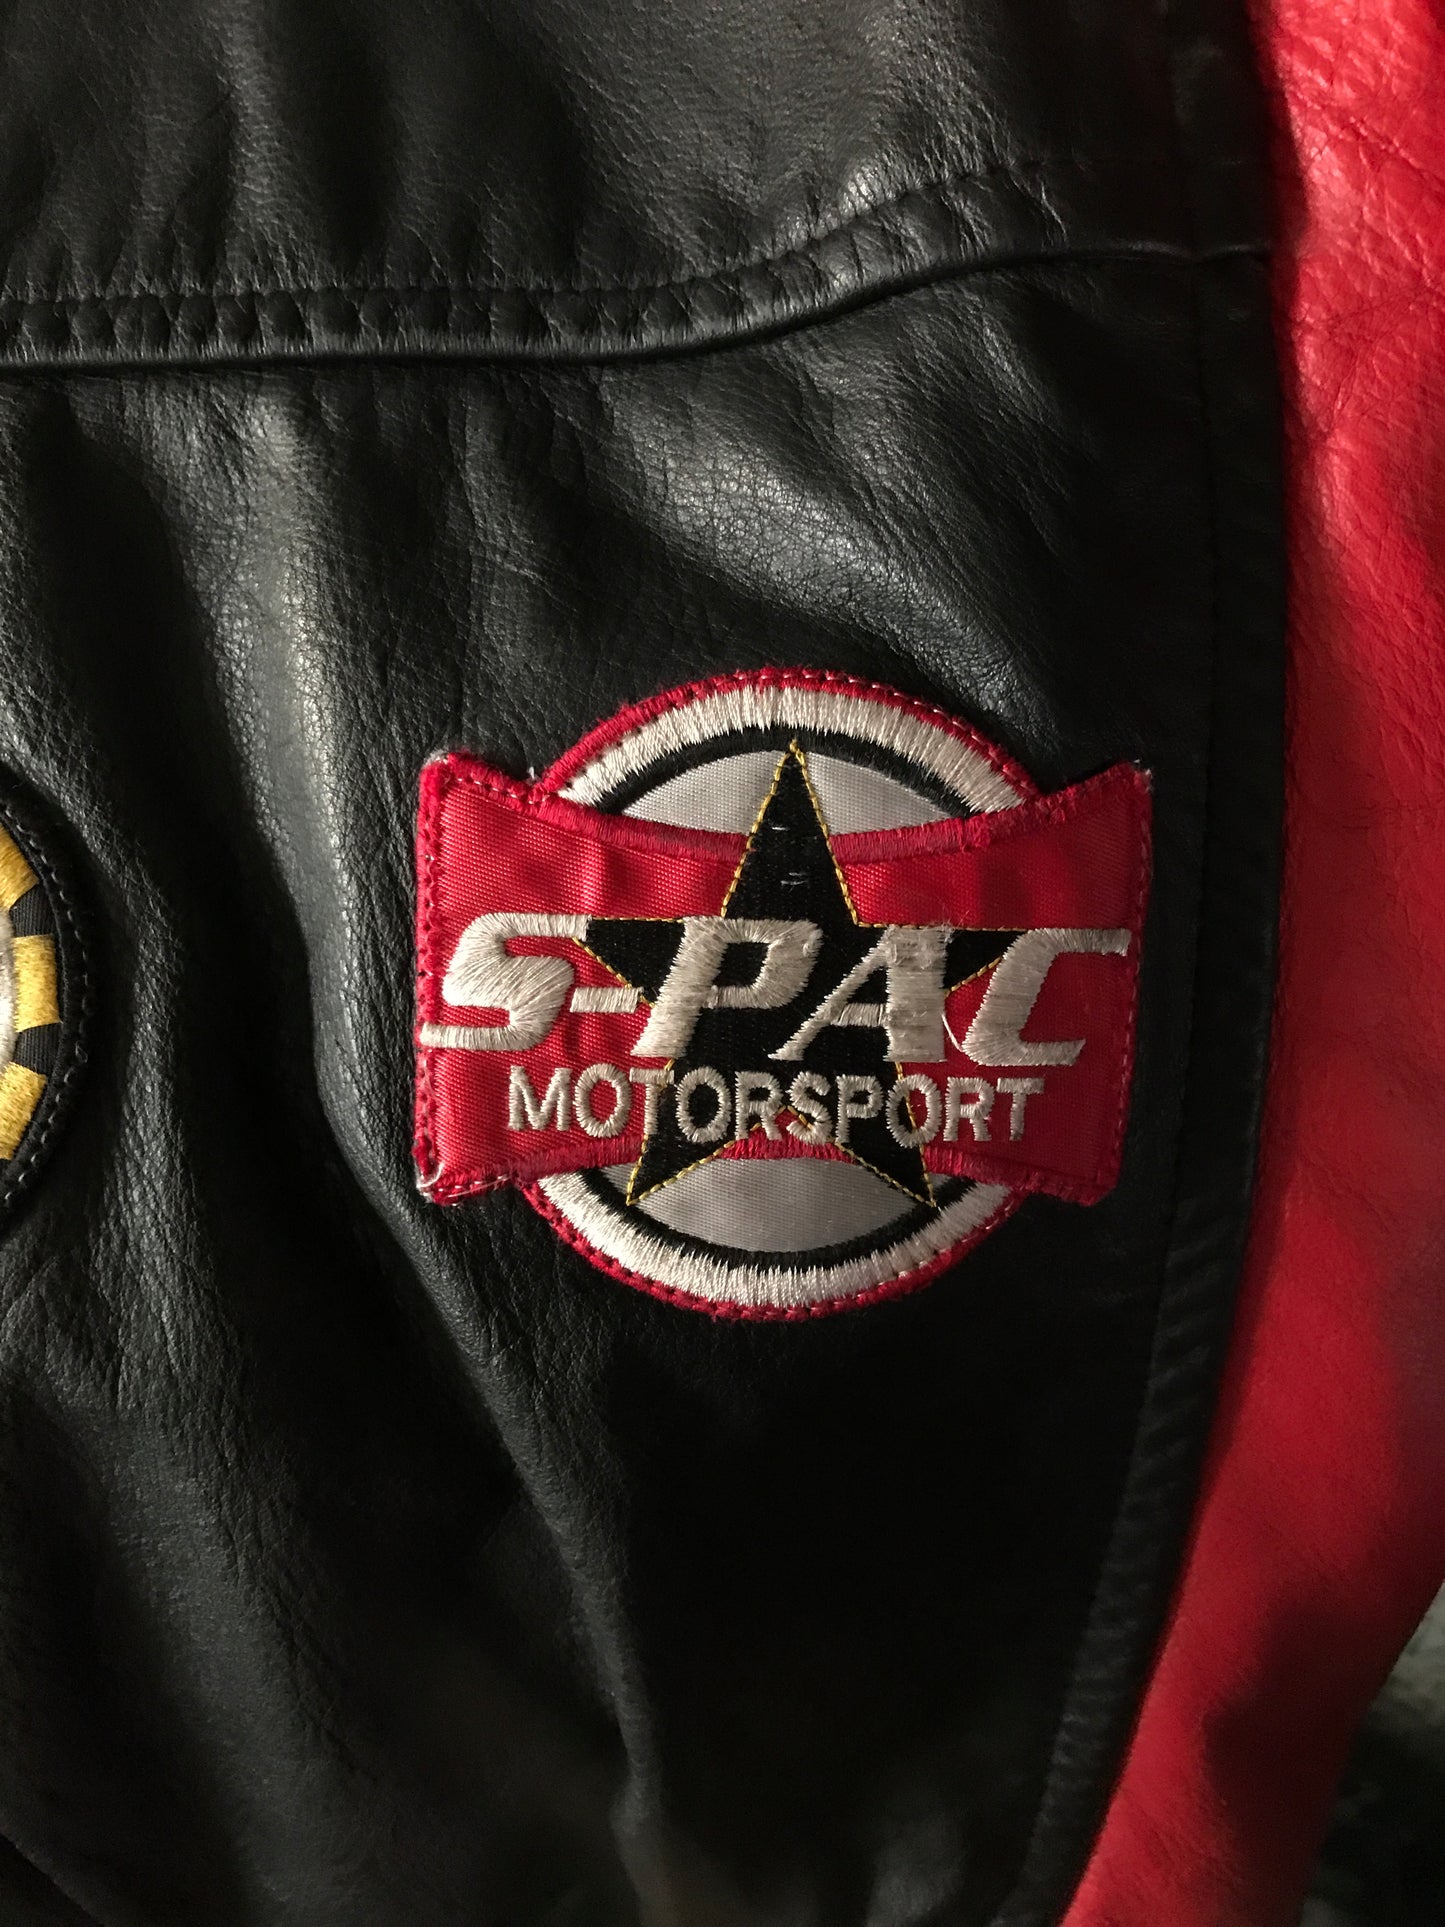 Schott Eurosport Vintage Jacket